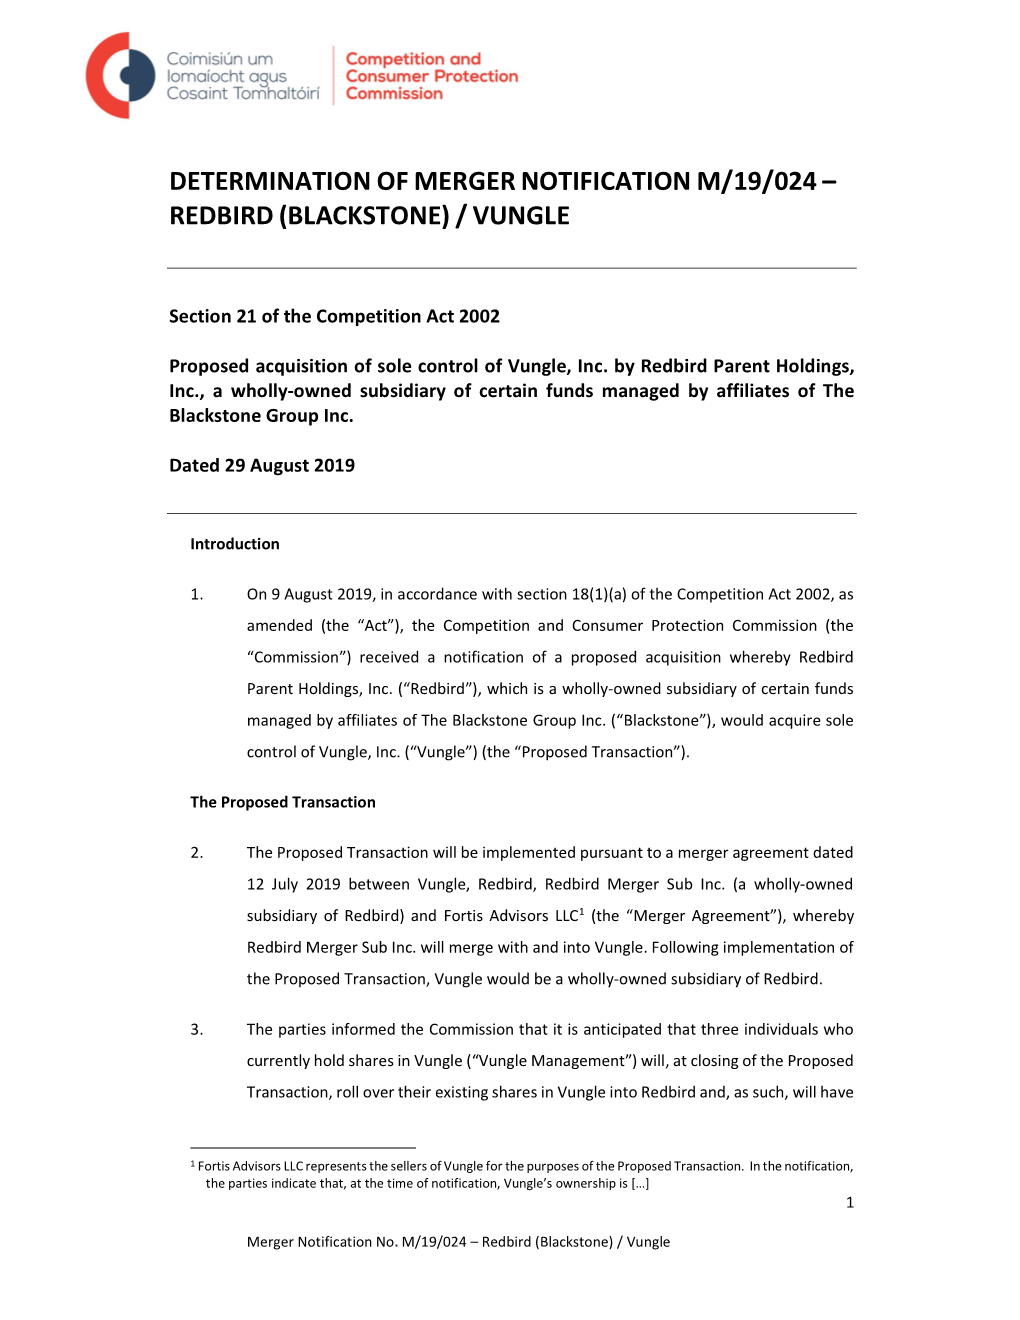 Determination of Mergernotification M/19/024 – Redbird (Blackstone)